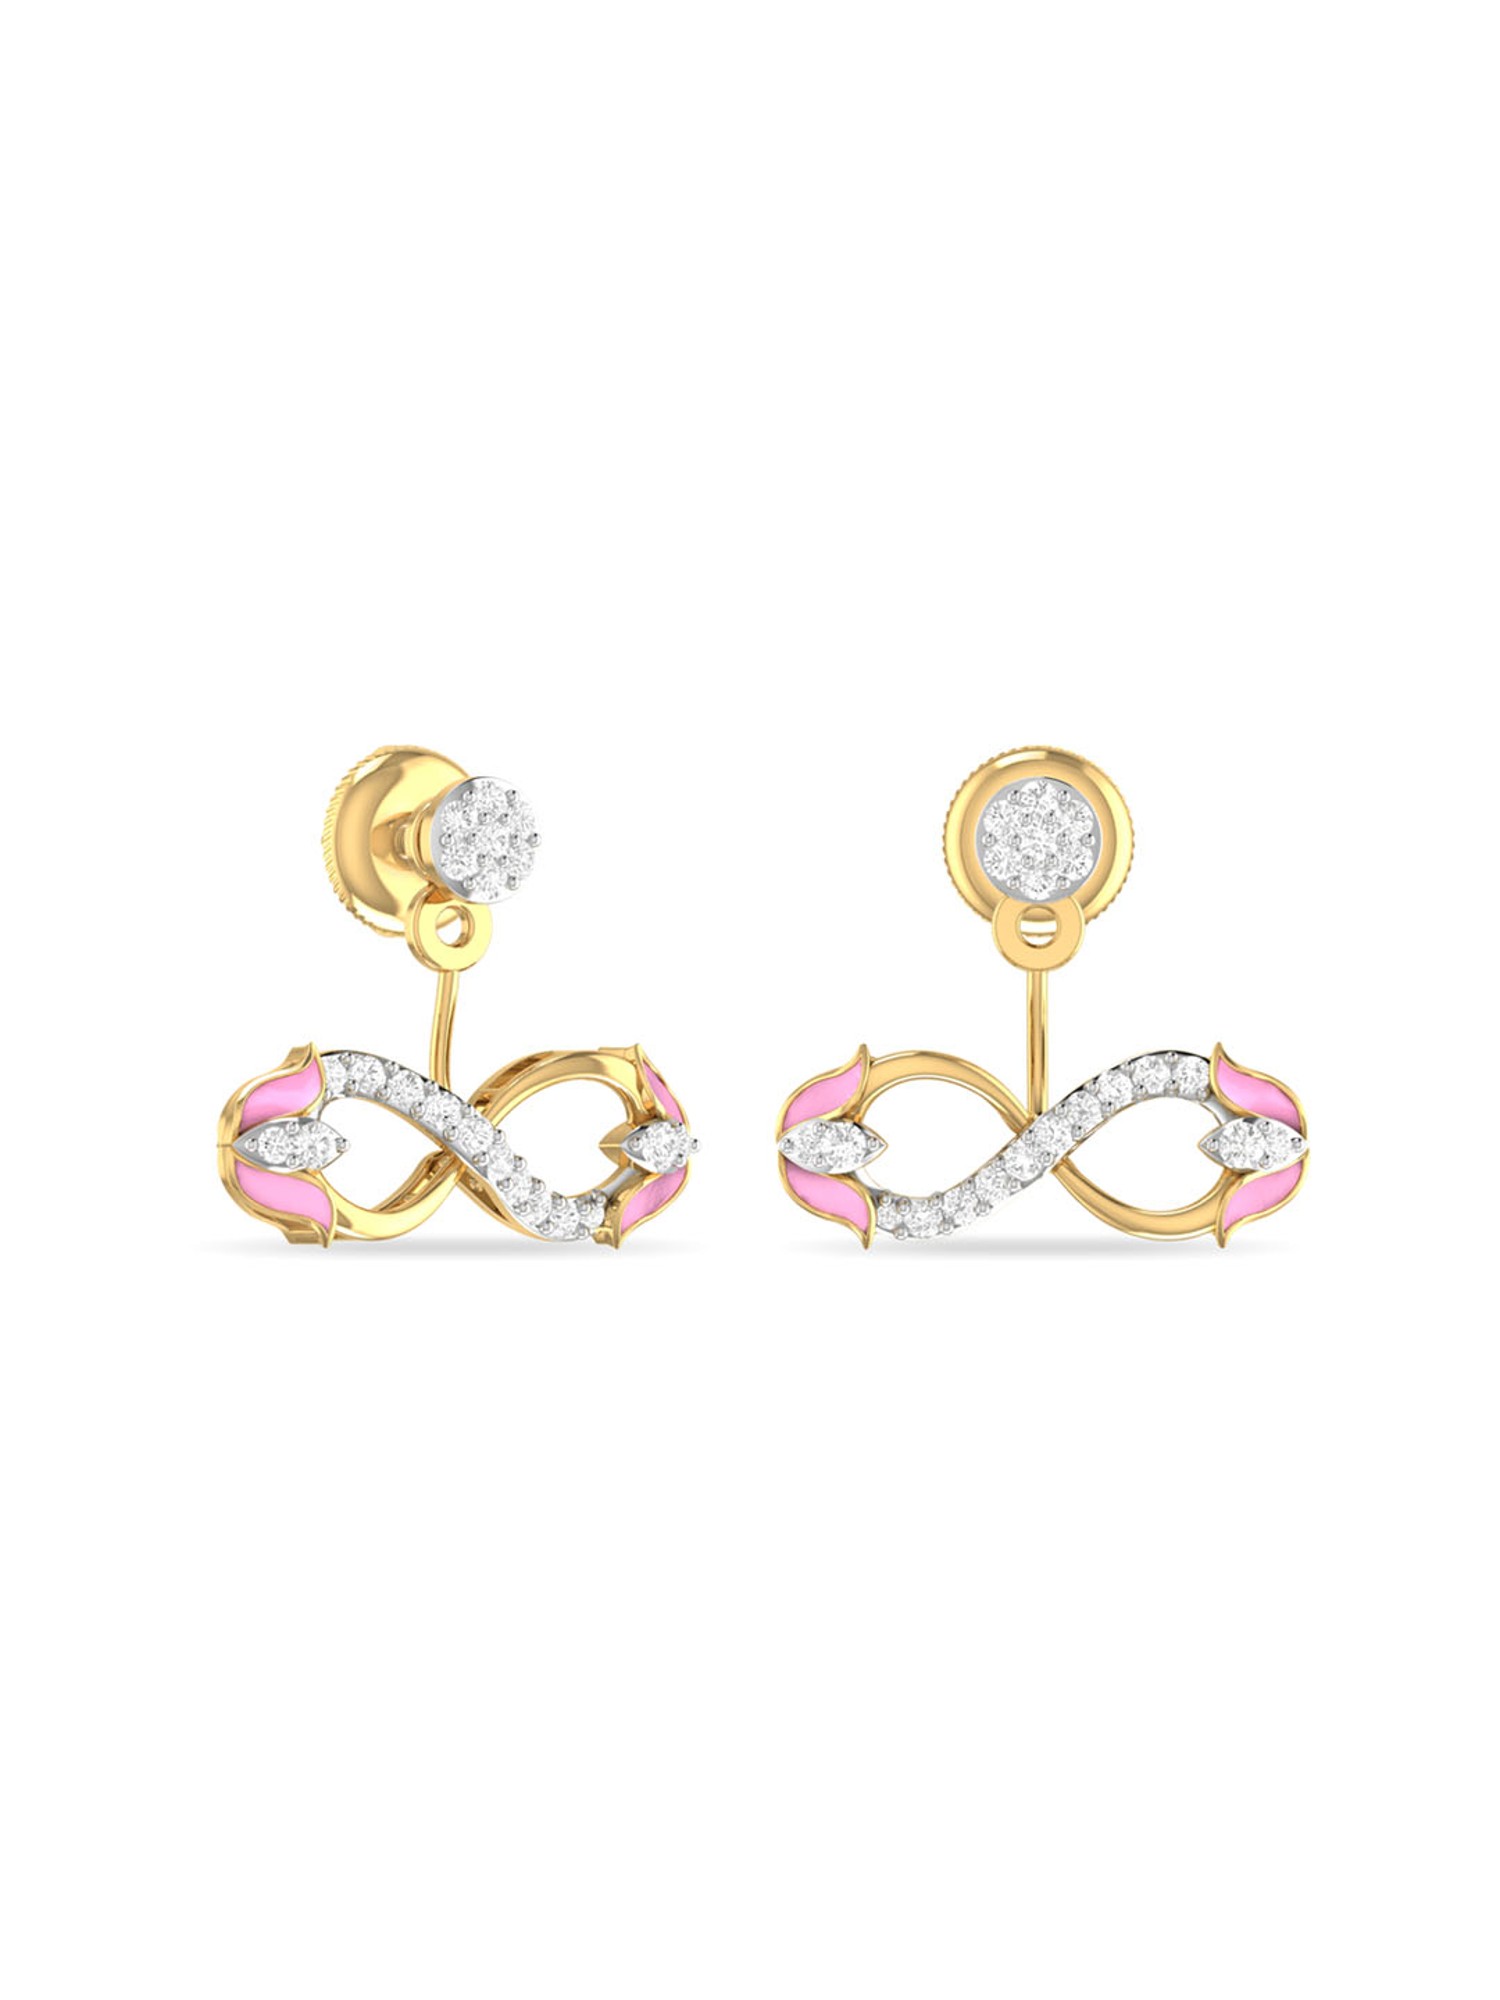 Diamond Rings Engagement Rings Wedding Rings Premier Destination for  Diamond Jewelry Shopping  Adori Millennium